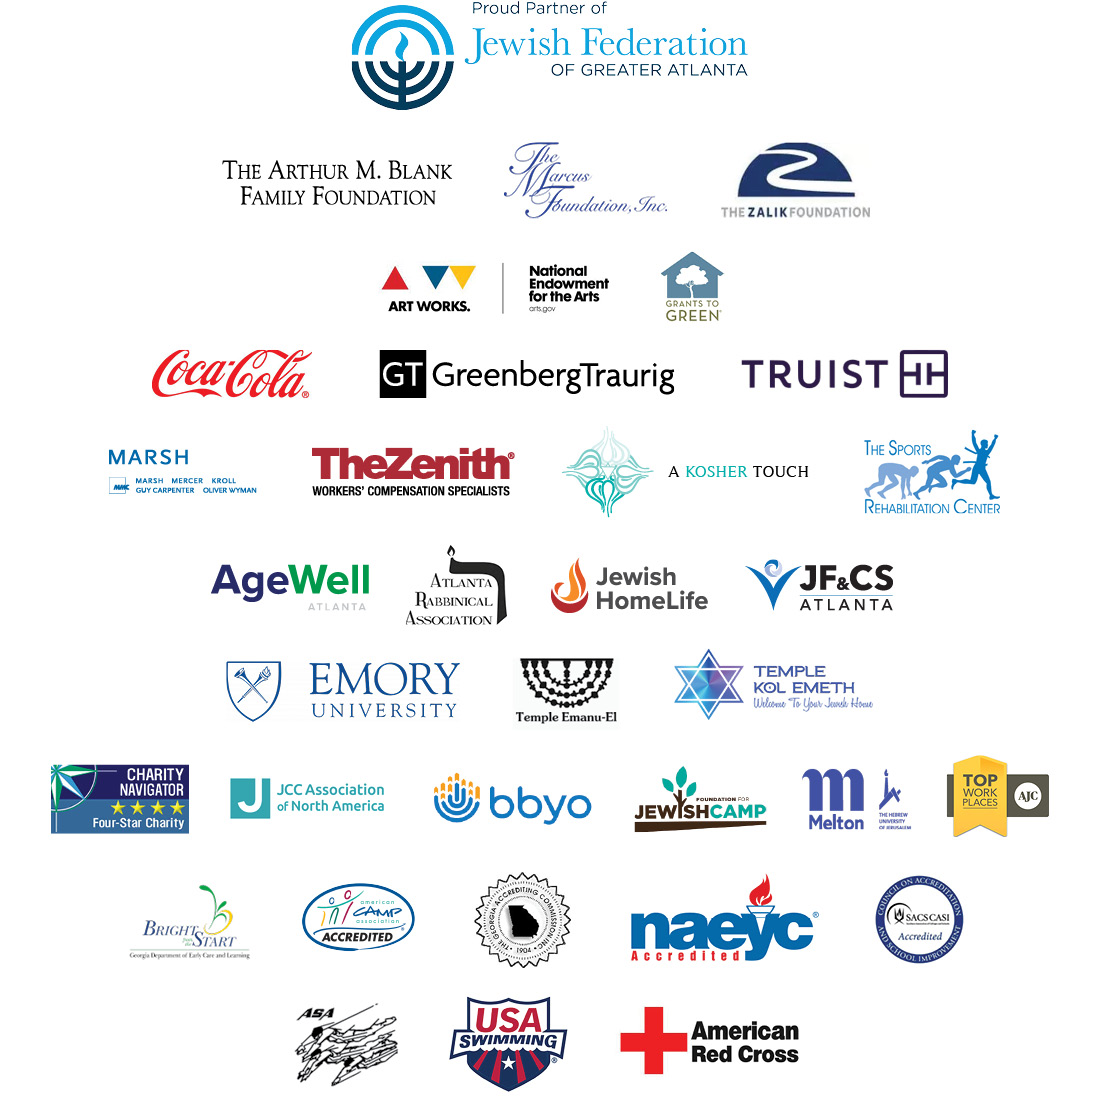 Major Partnerships, Sponsors and Accreditations